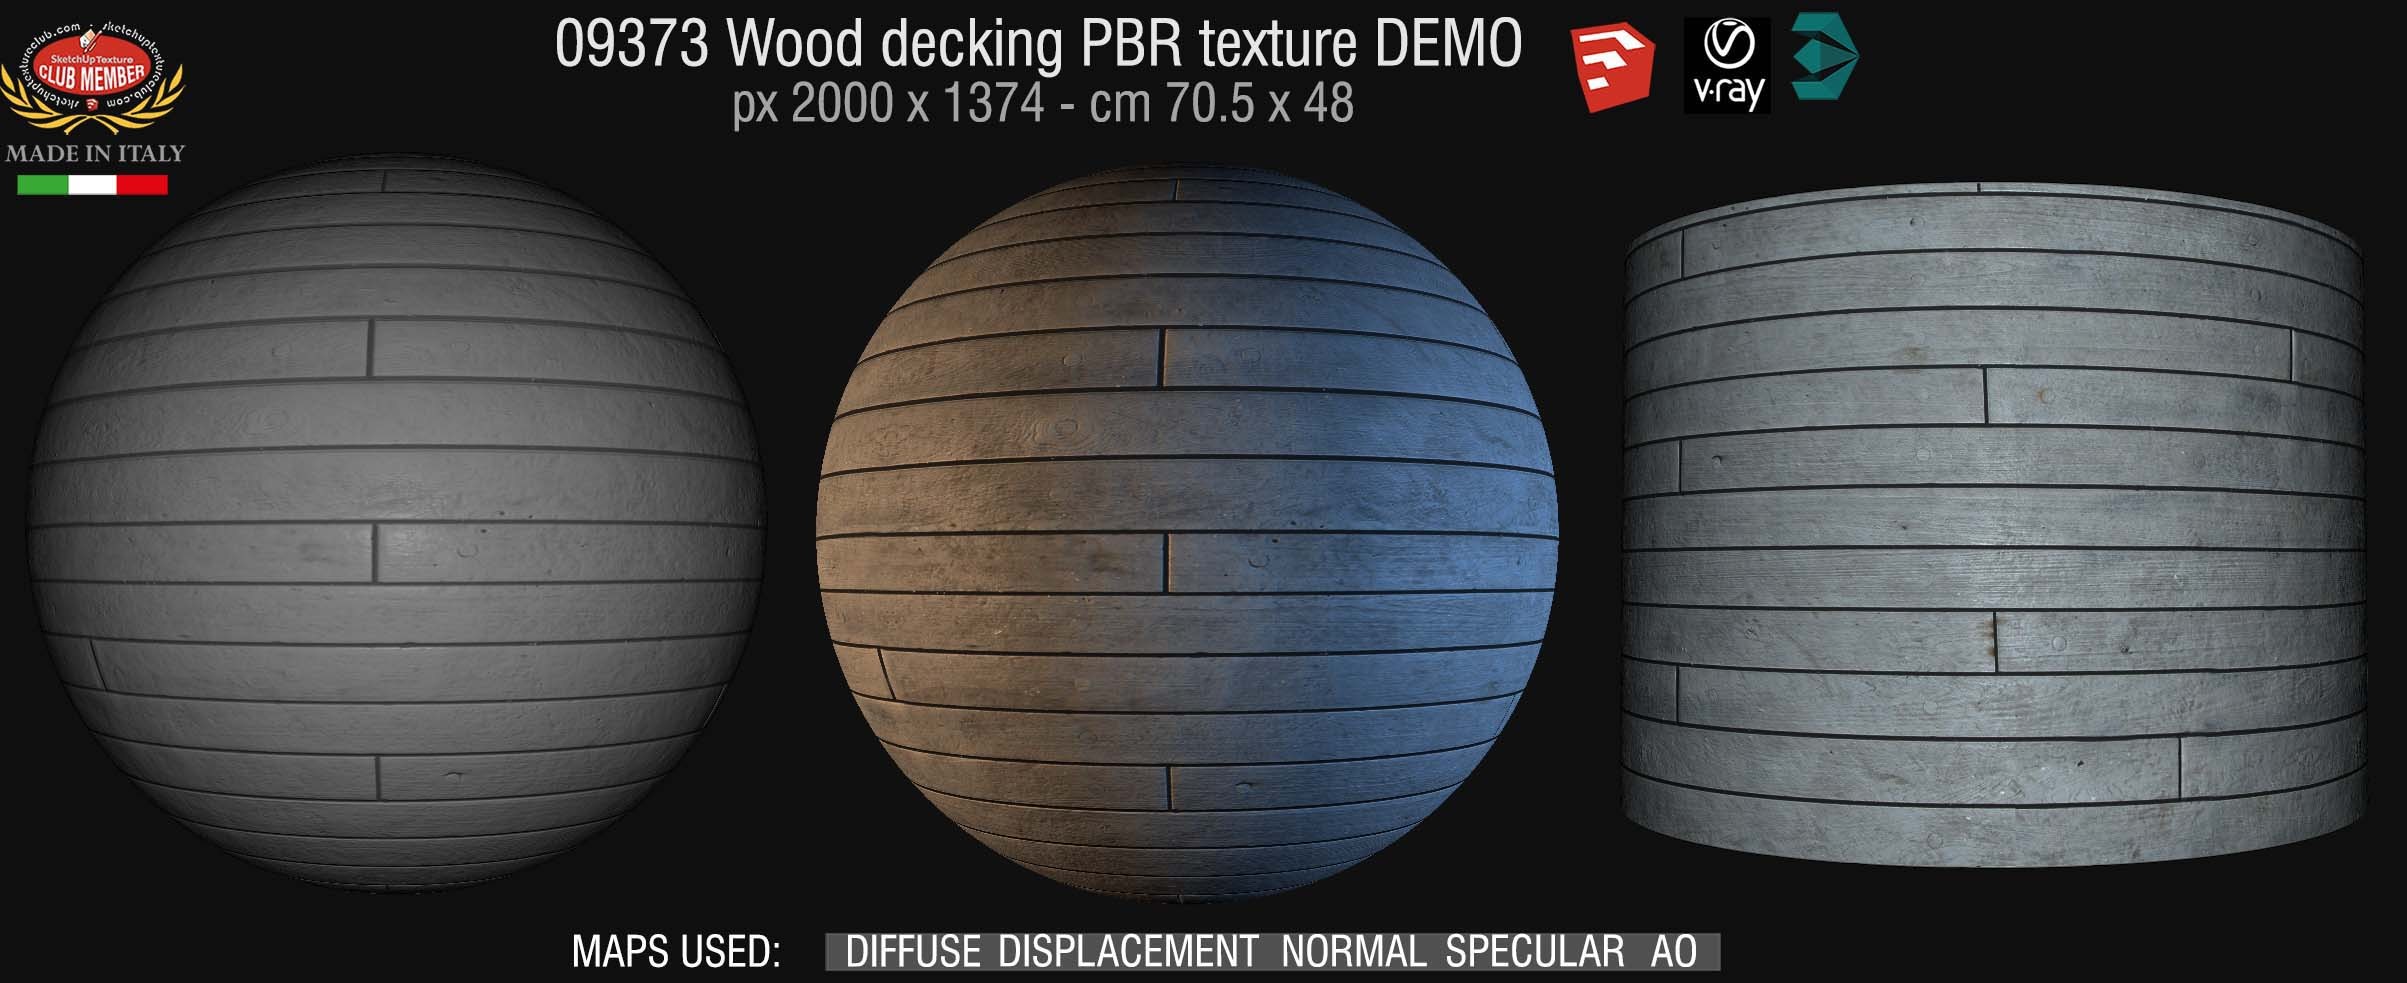 09373 Wood decking PBR texture seamless DEMO